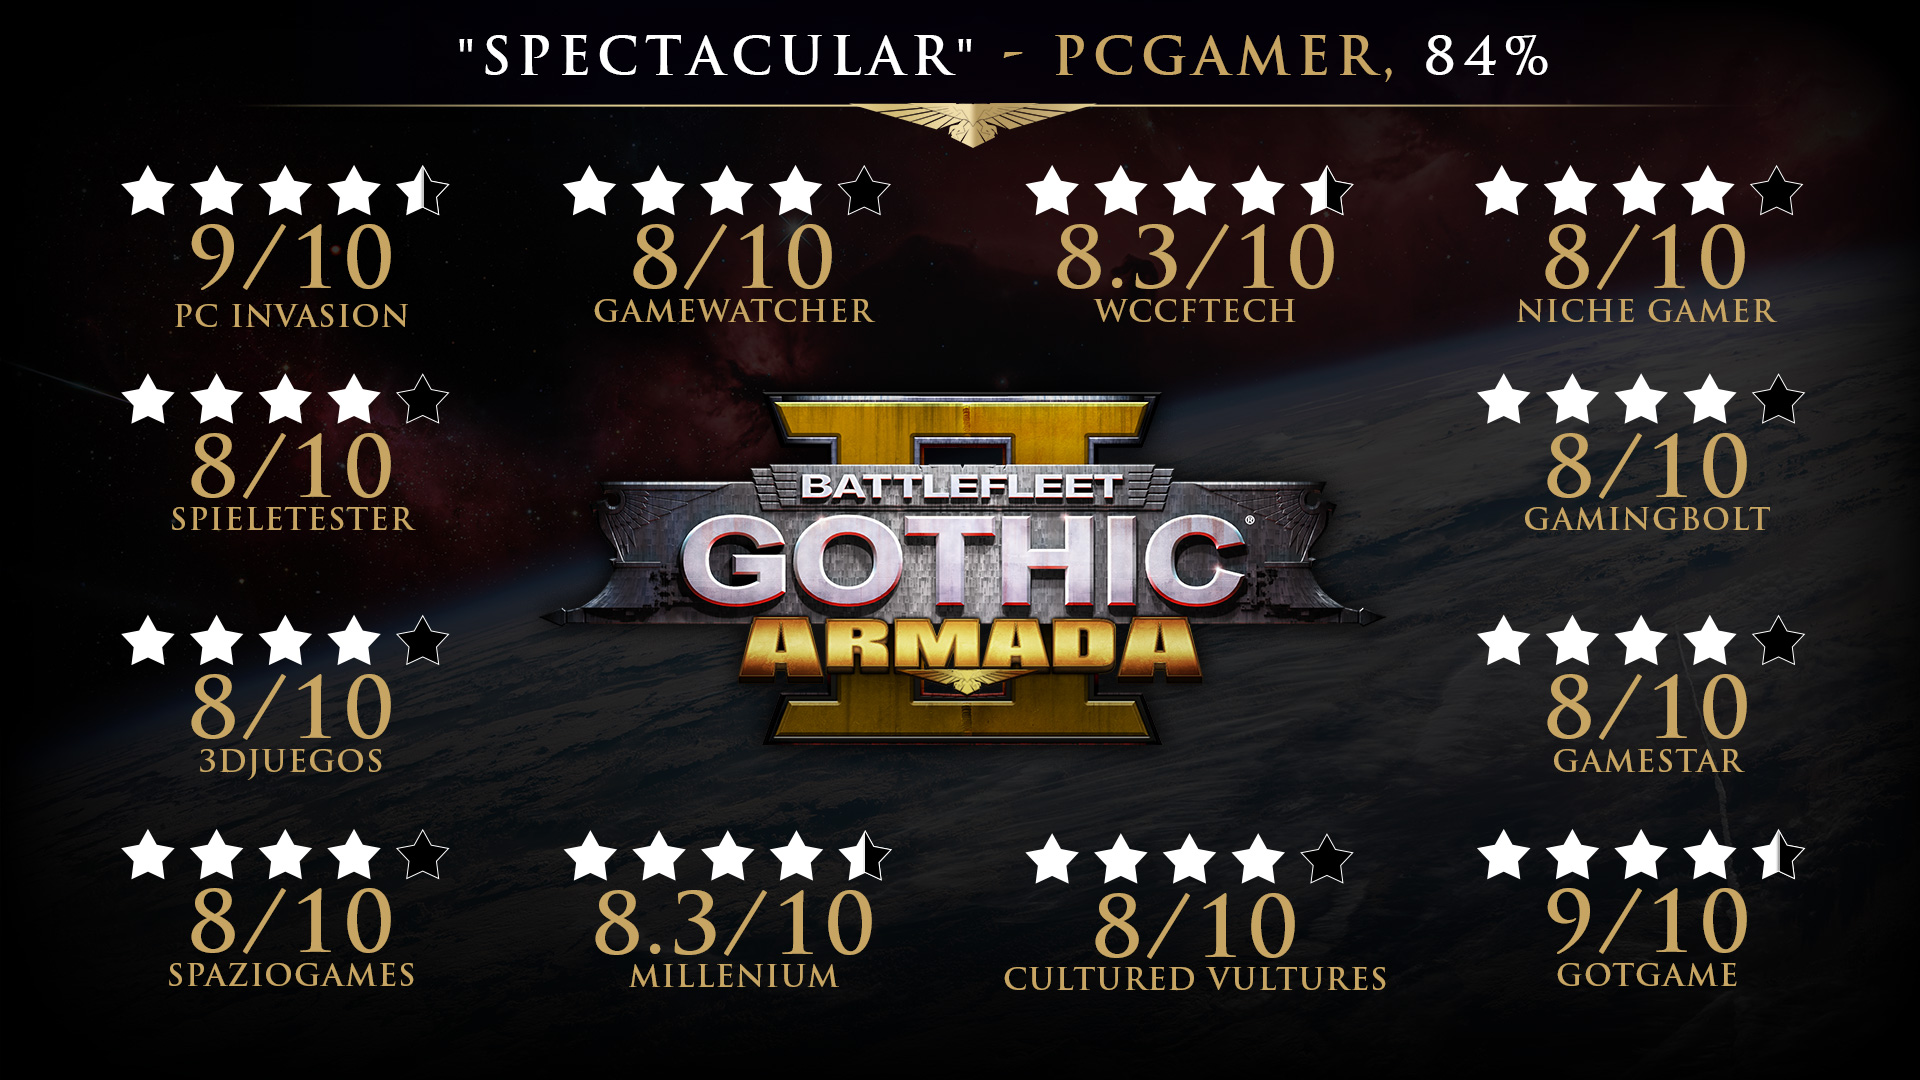 哥特舰队：阿玛达2/Battlefleet Gothic: Armada 2